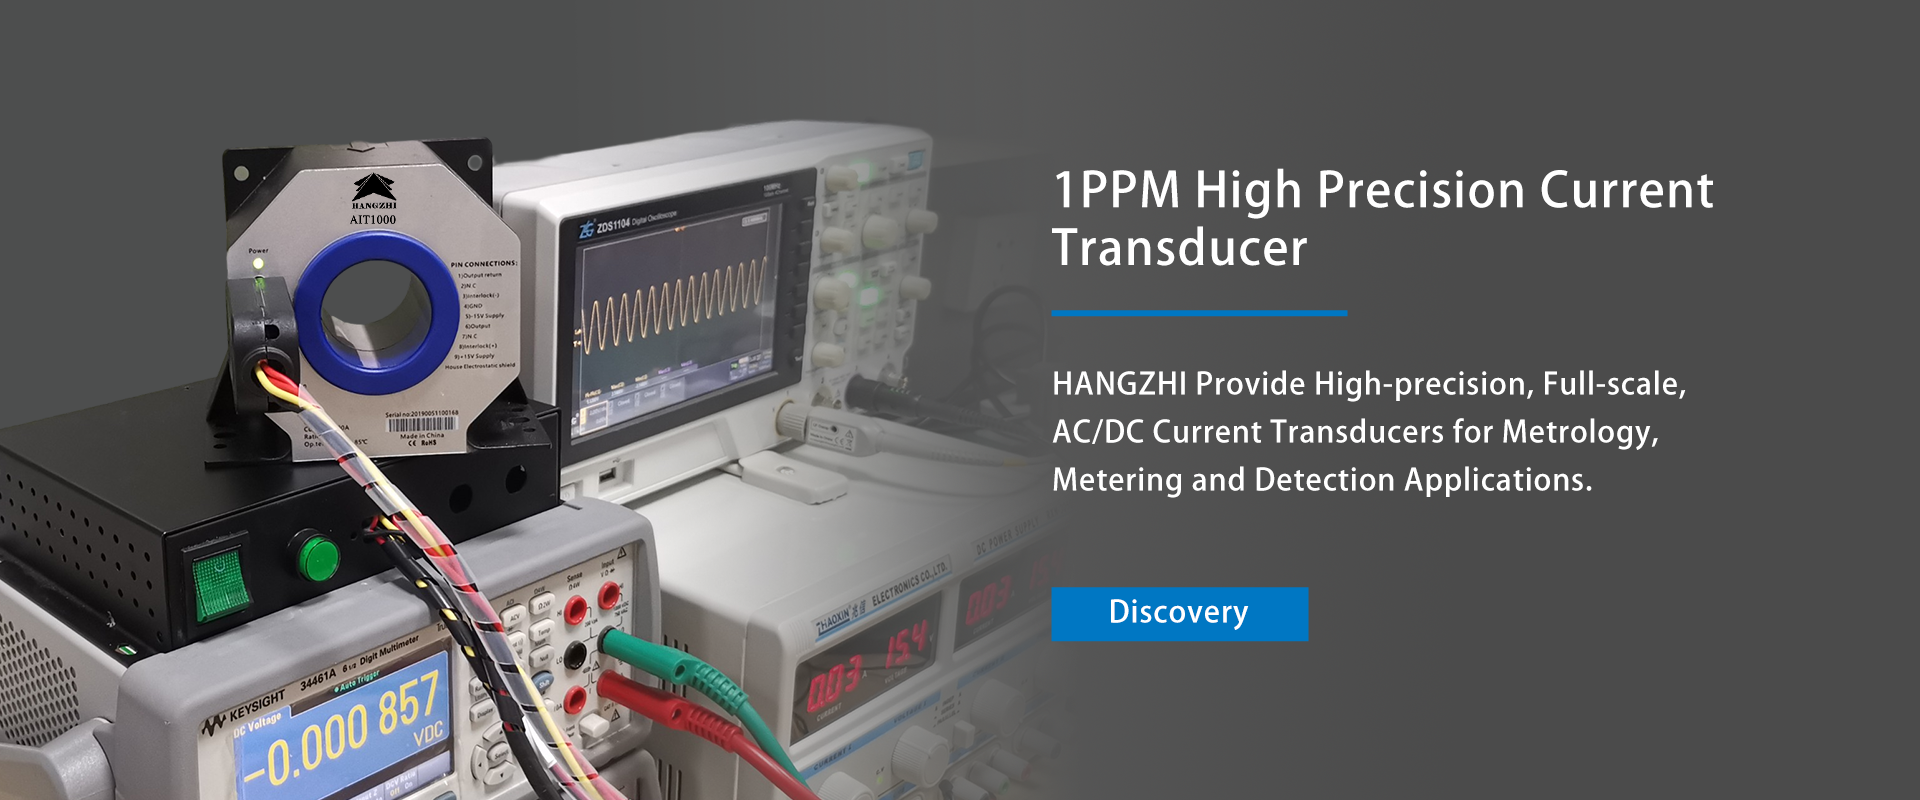 High precision current transducer